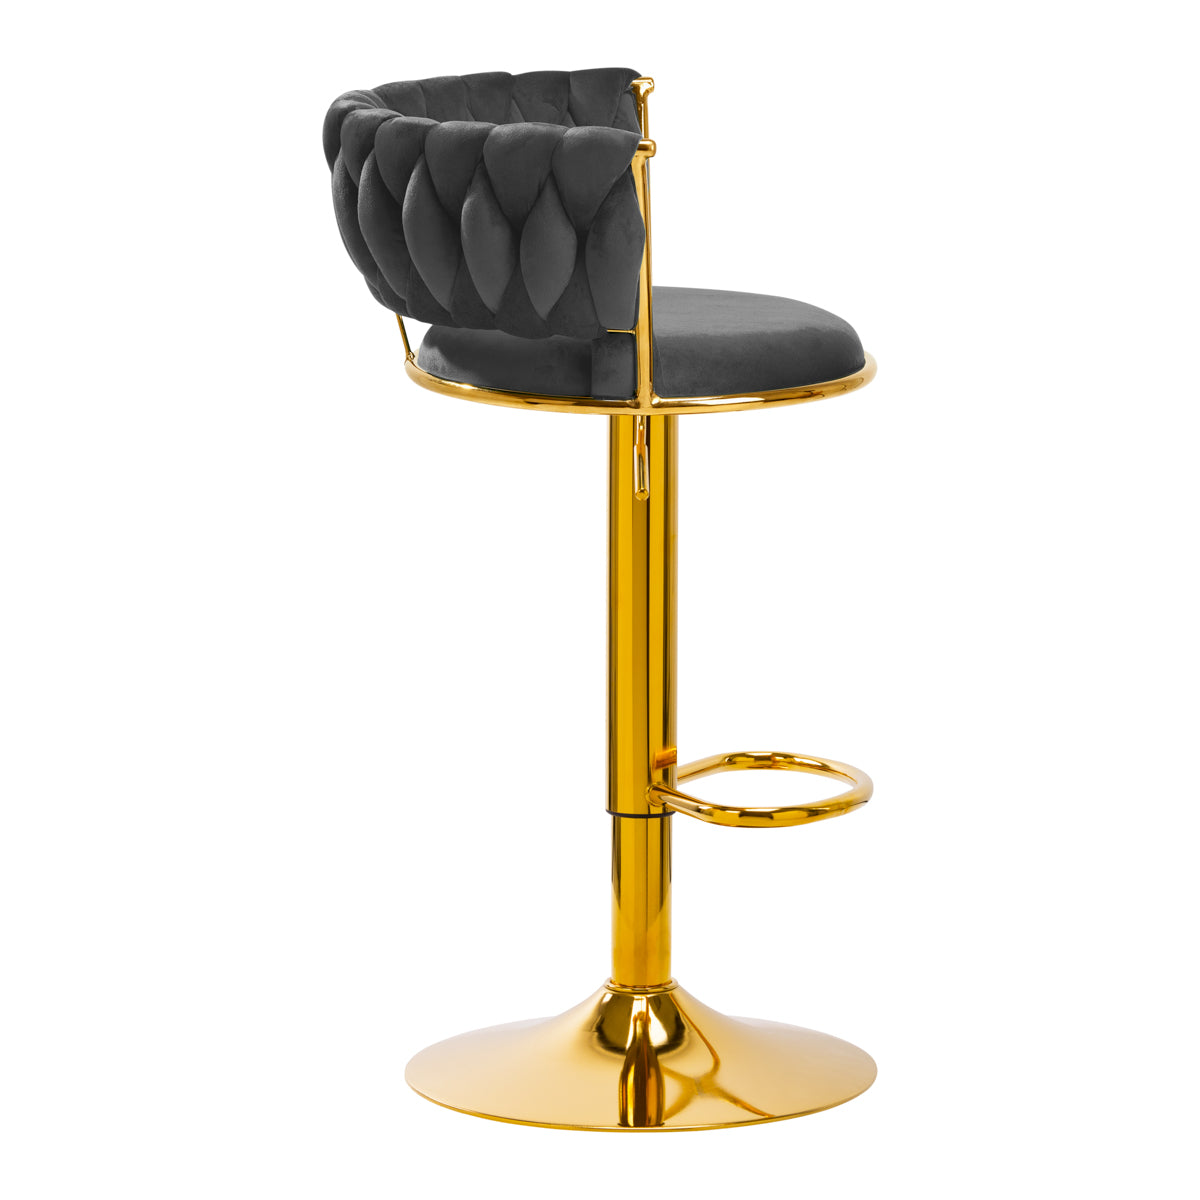 4Rico cosmetic stool QS-B313a velvet gray 